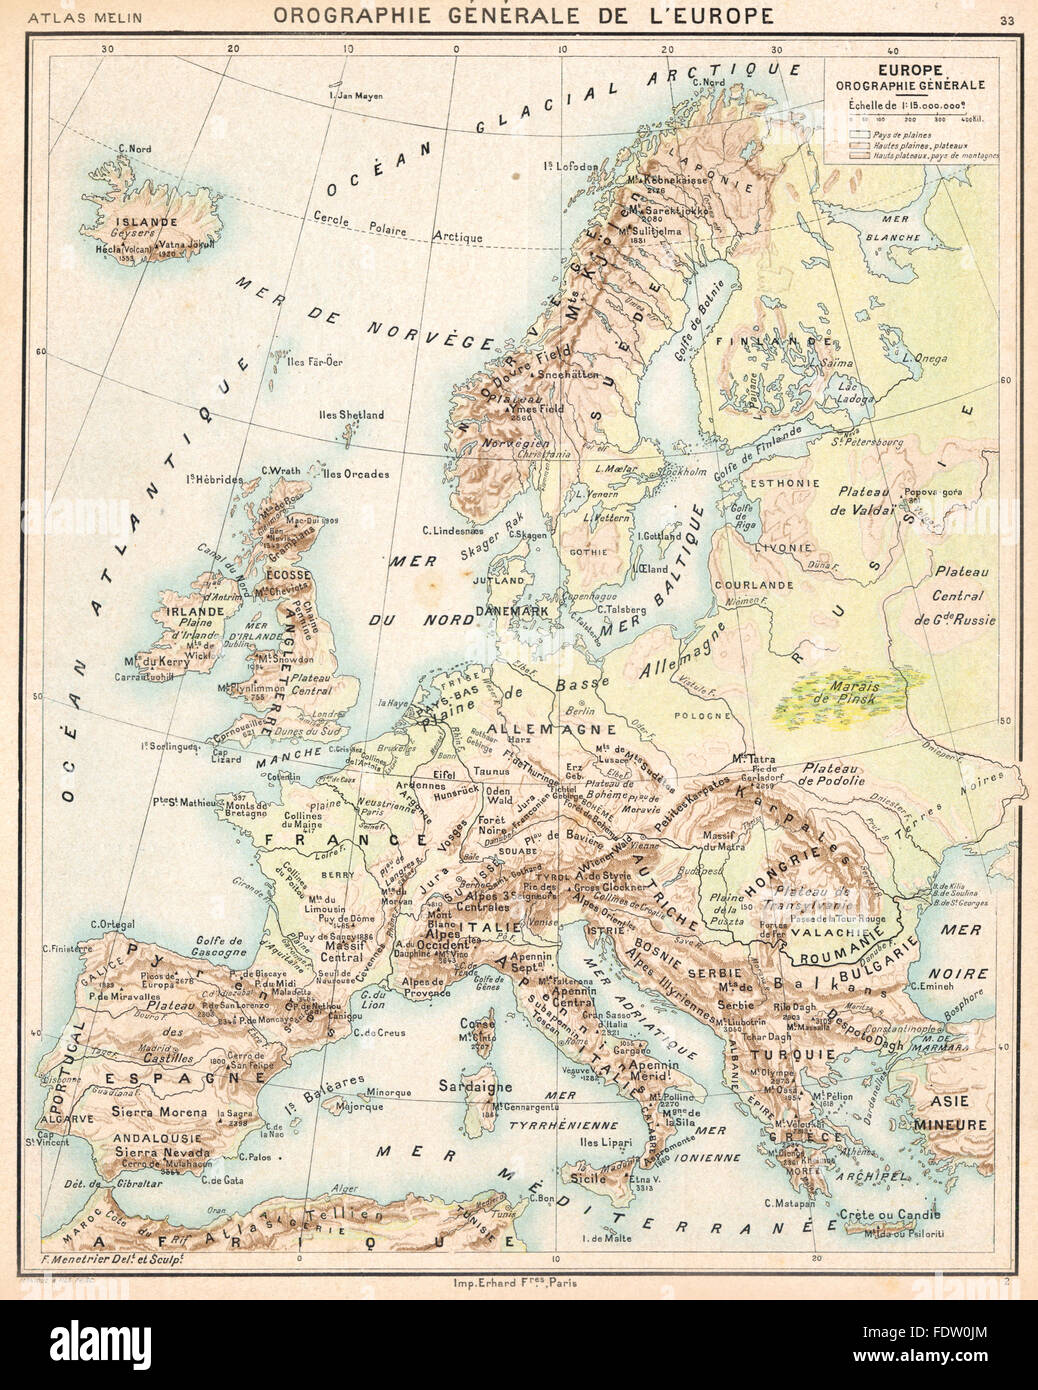 Europa: Orographie Générale de L'Europe, 1900 Antike Landkarte Stockfoto